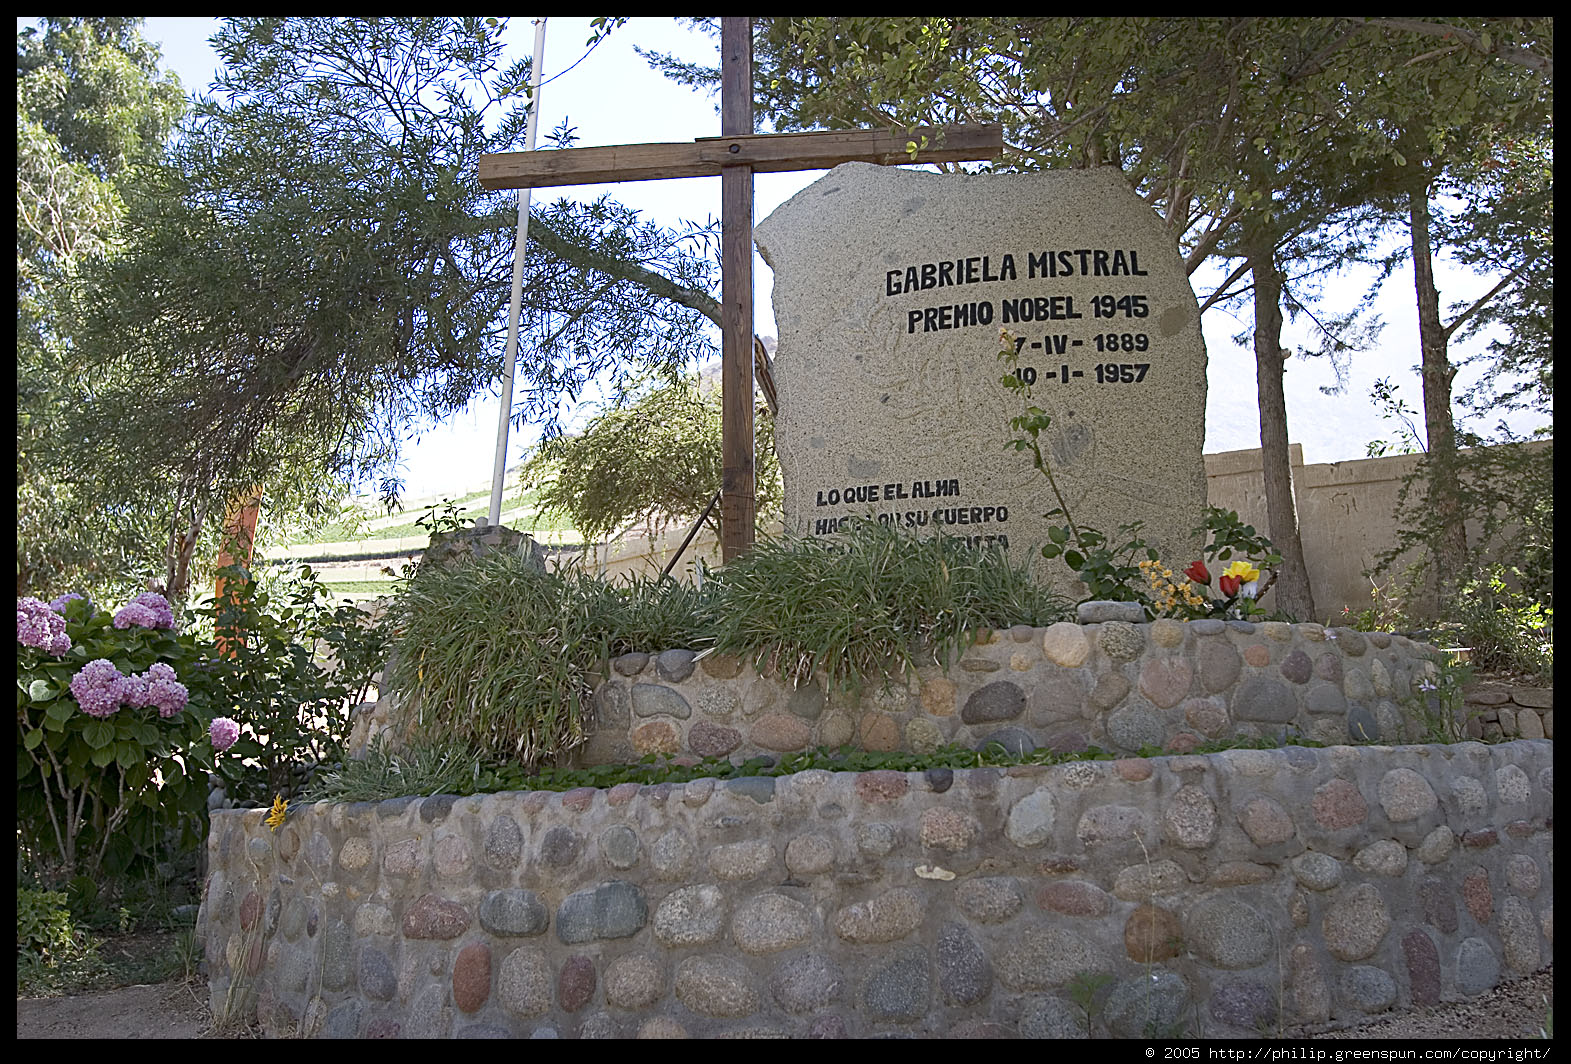 http://philip.greenspun.com/images/200501-chile/200501-valle-del-elqui/gabriela-mistral-grave.4.jpg